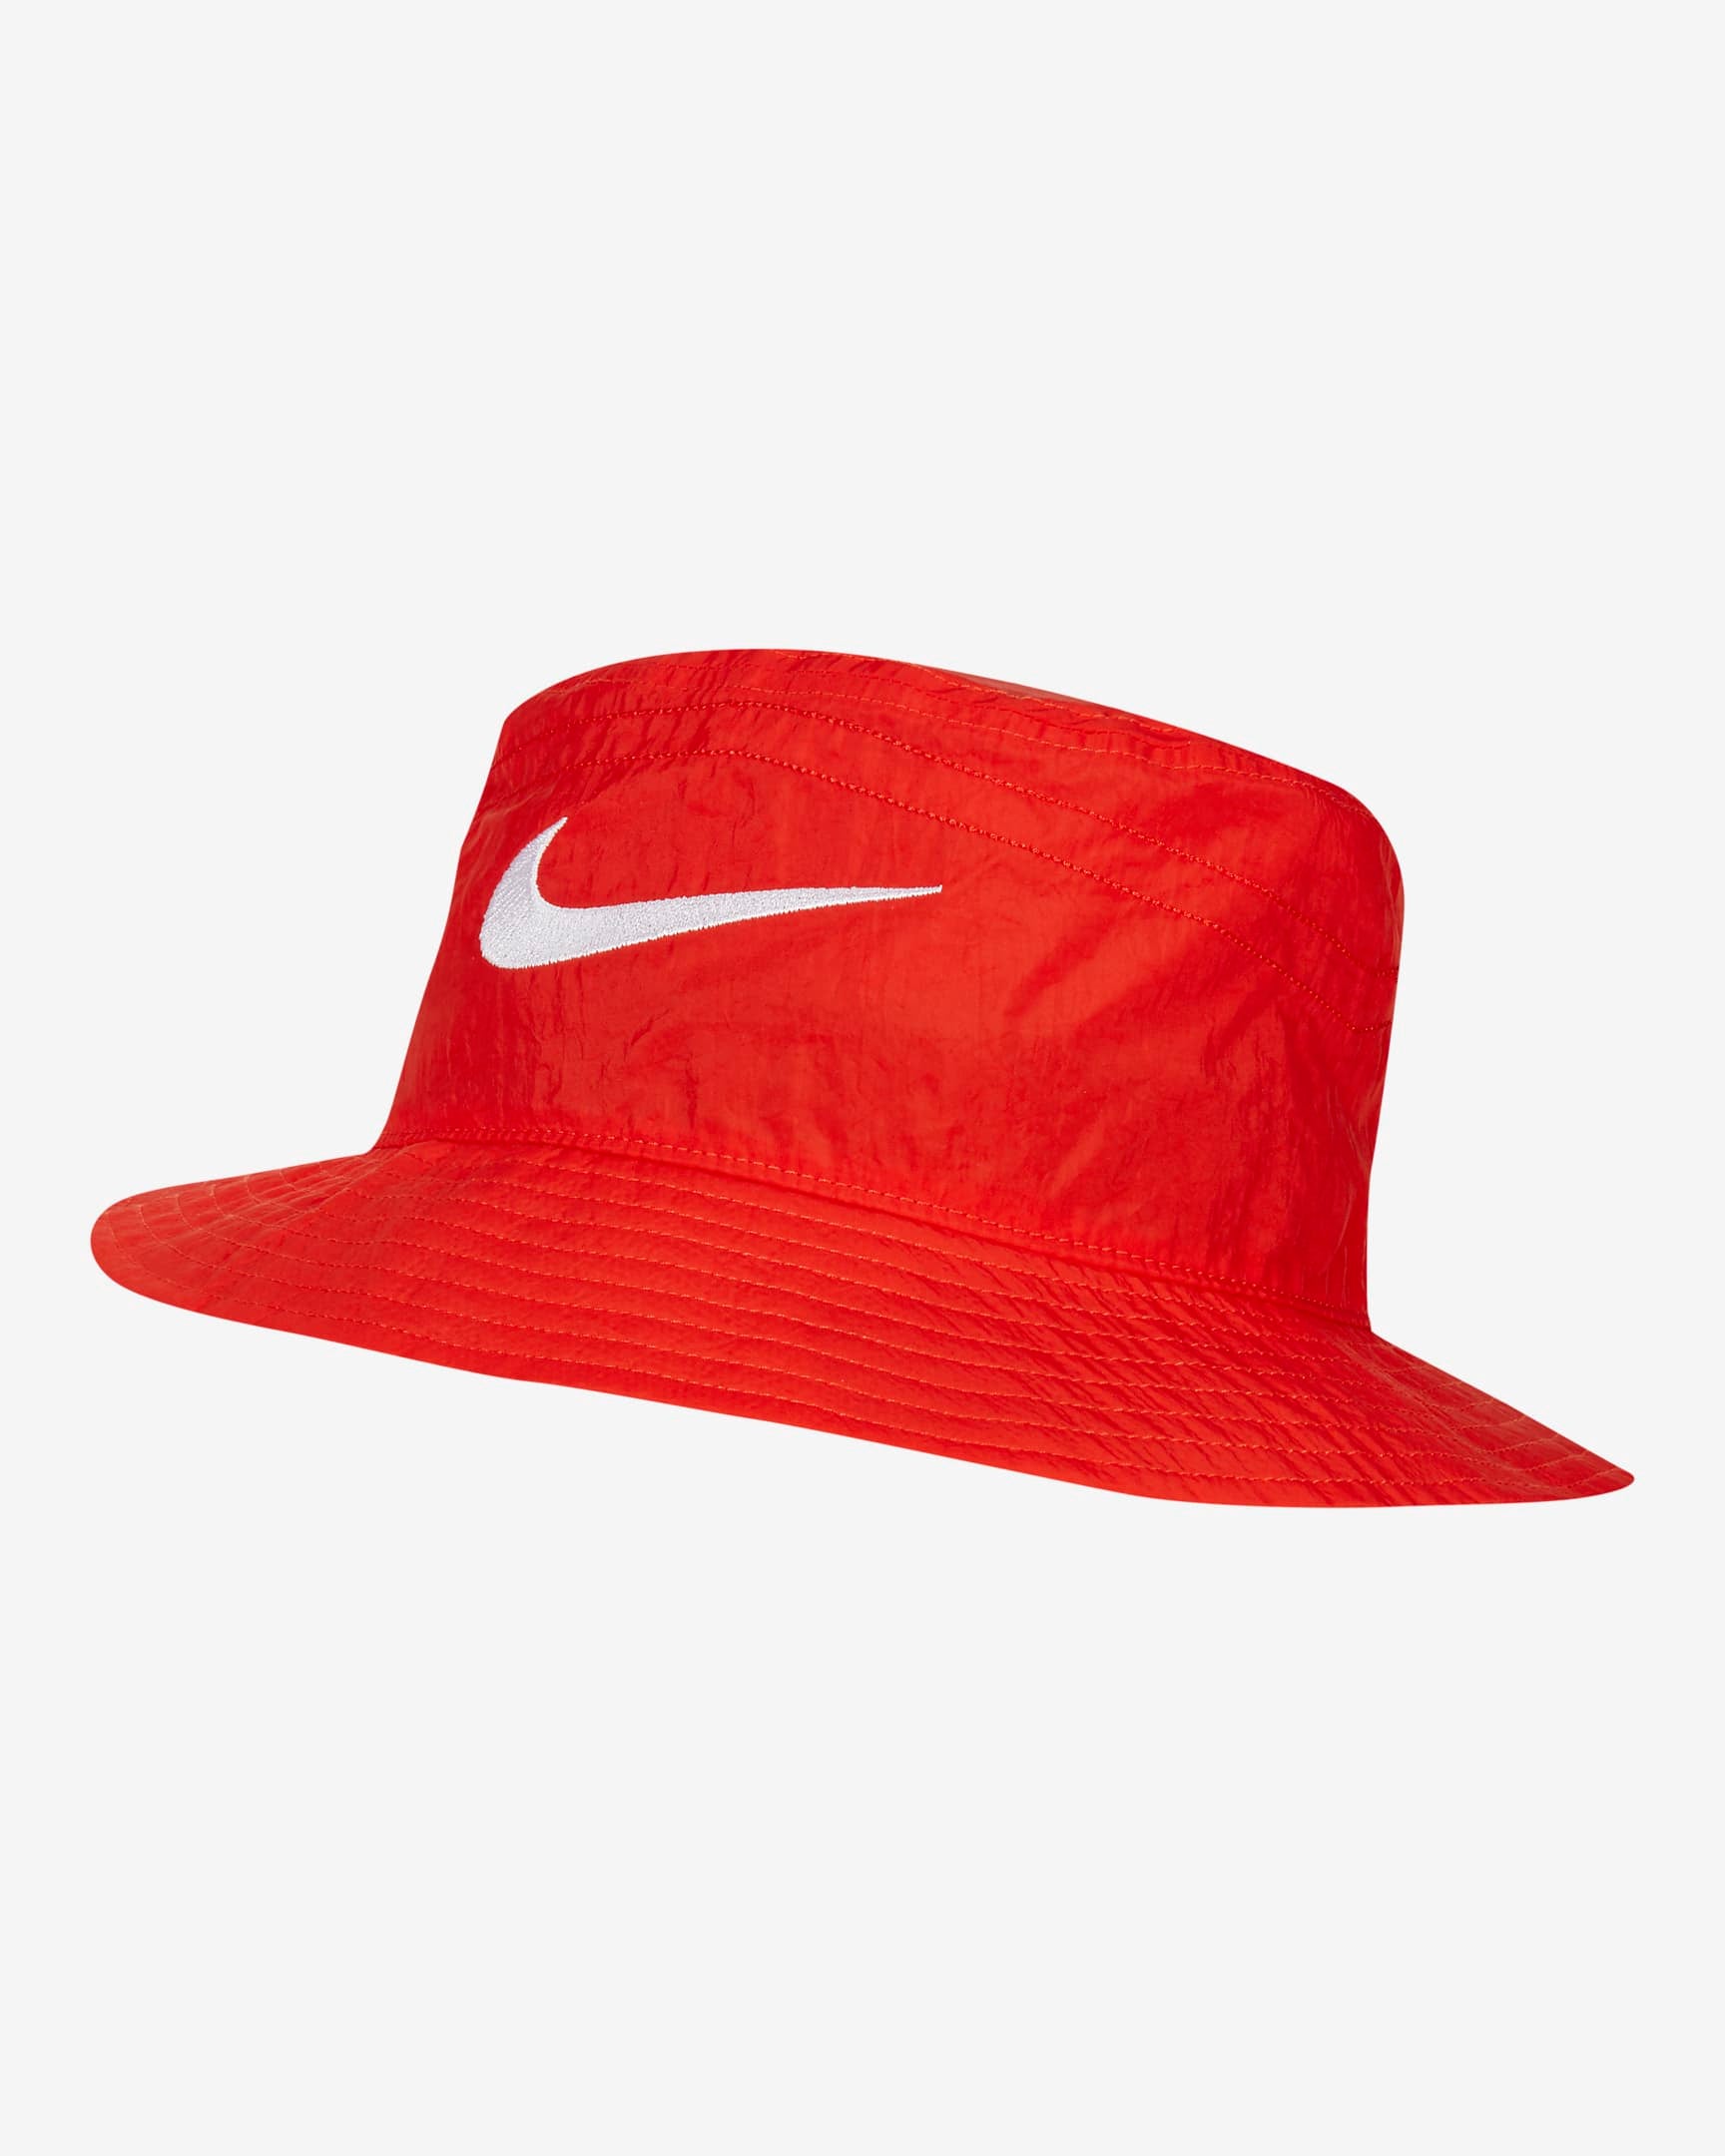 Nike x Stüssy + Bucket Hat